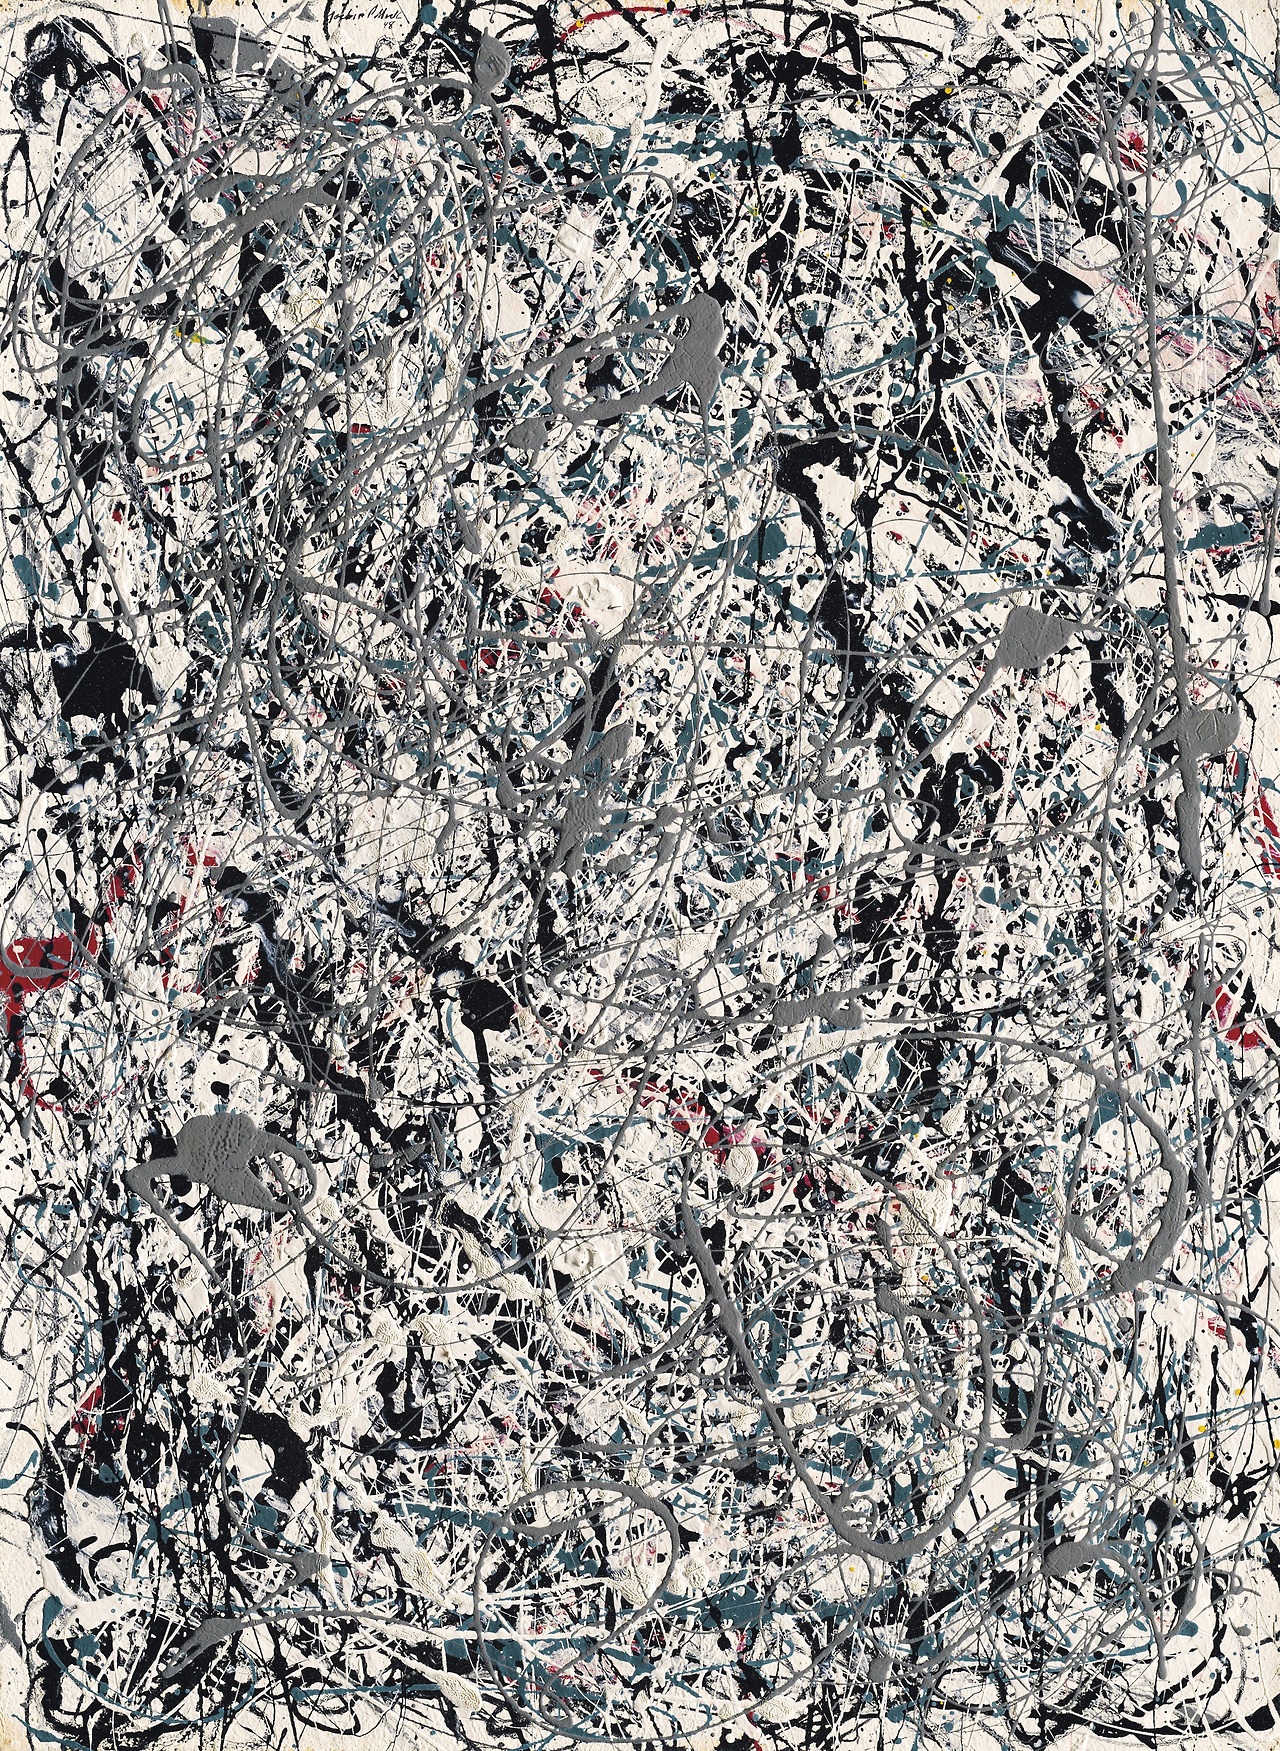 Jackson Pollock - Number 19, 1948